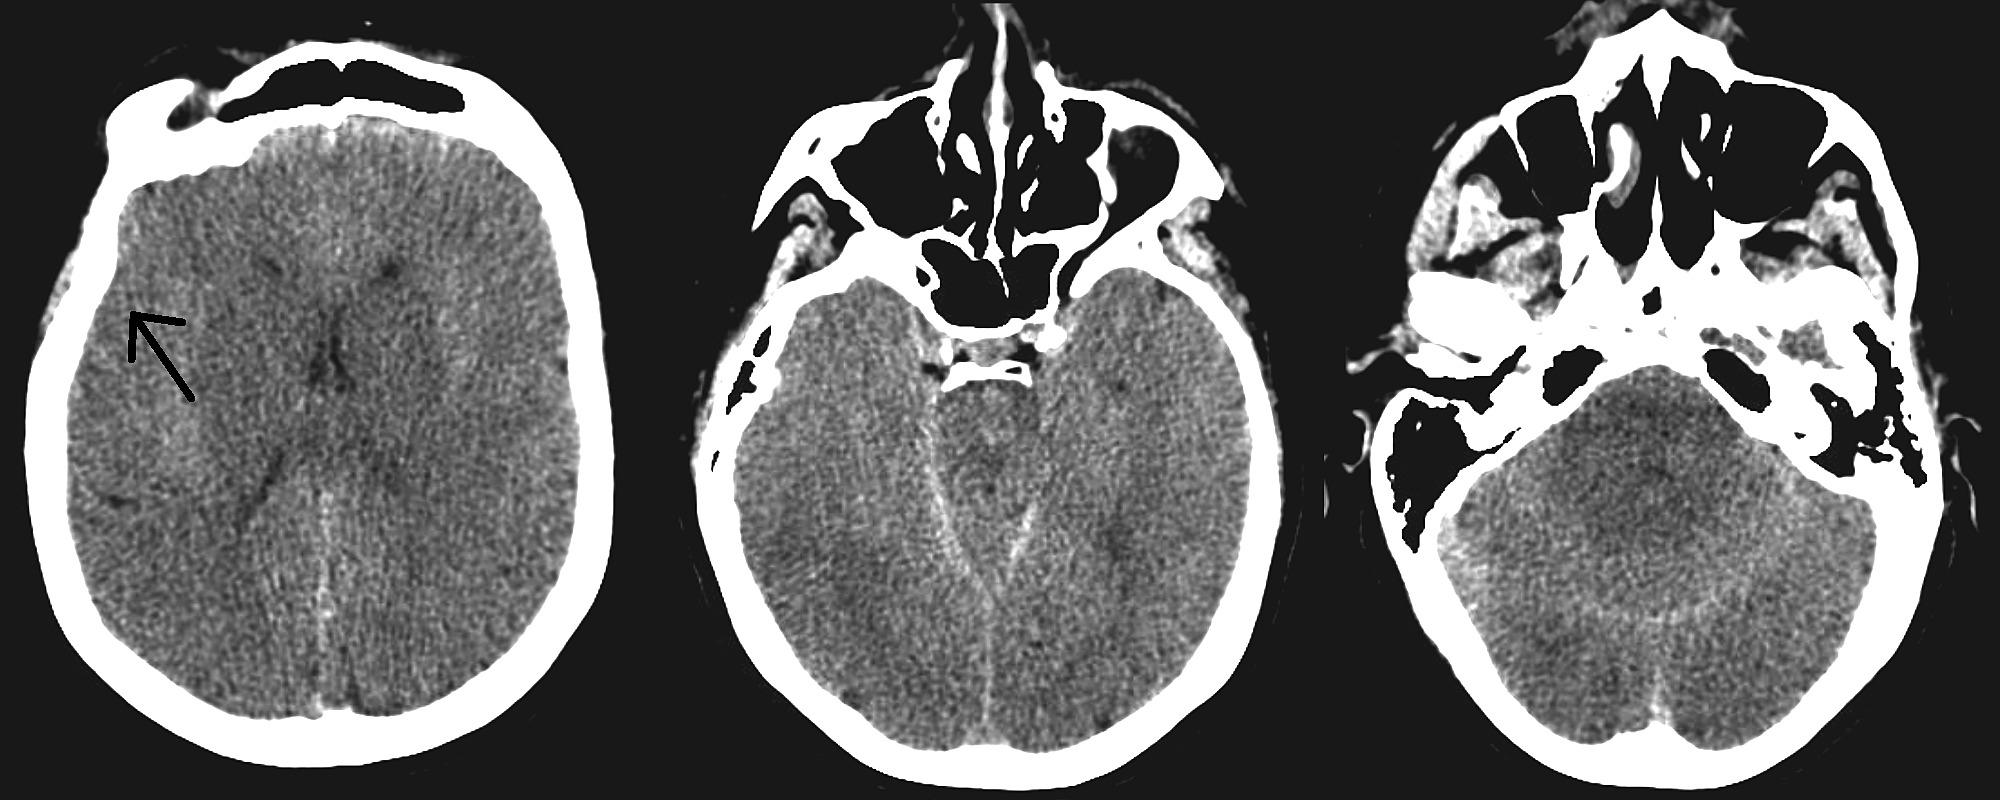 Cureus Pseudohypoxic Brain Swelling After Elective Lumbar Spinal Surgery Case Report